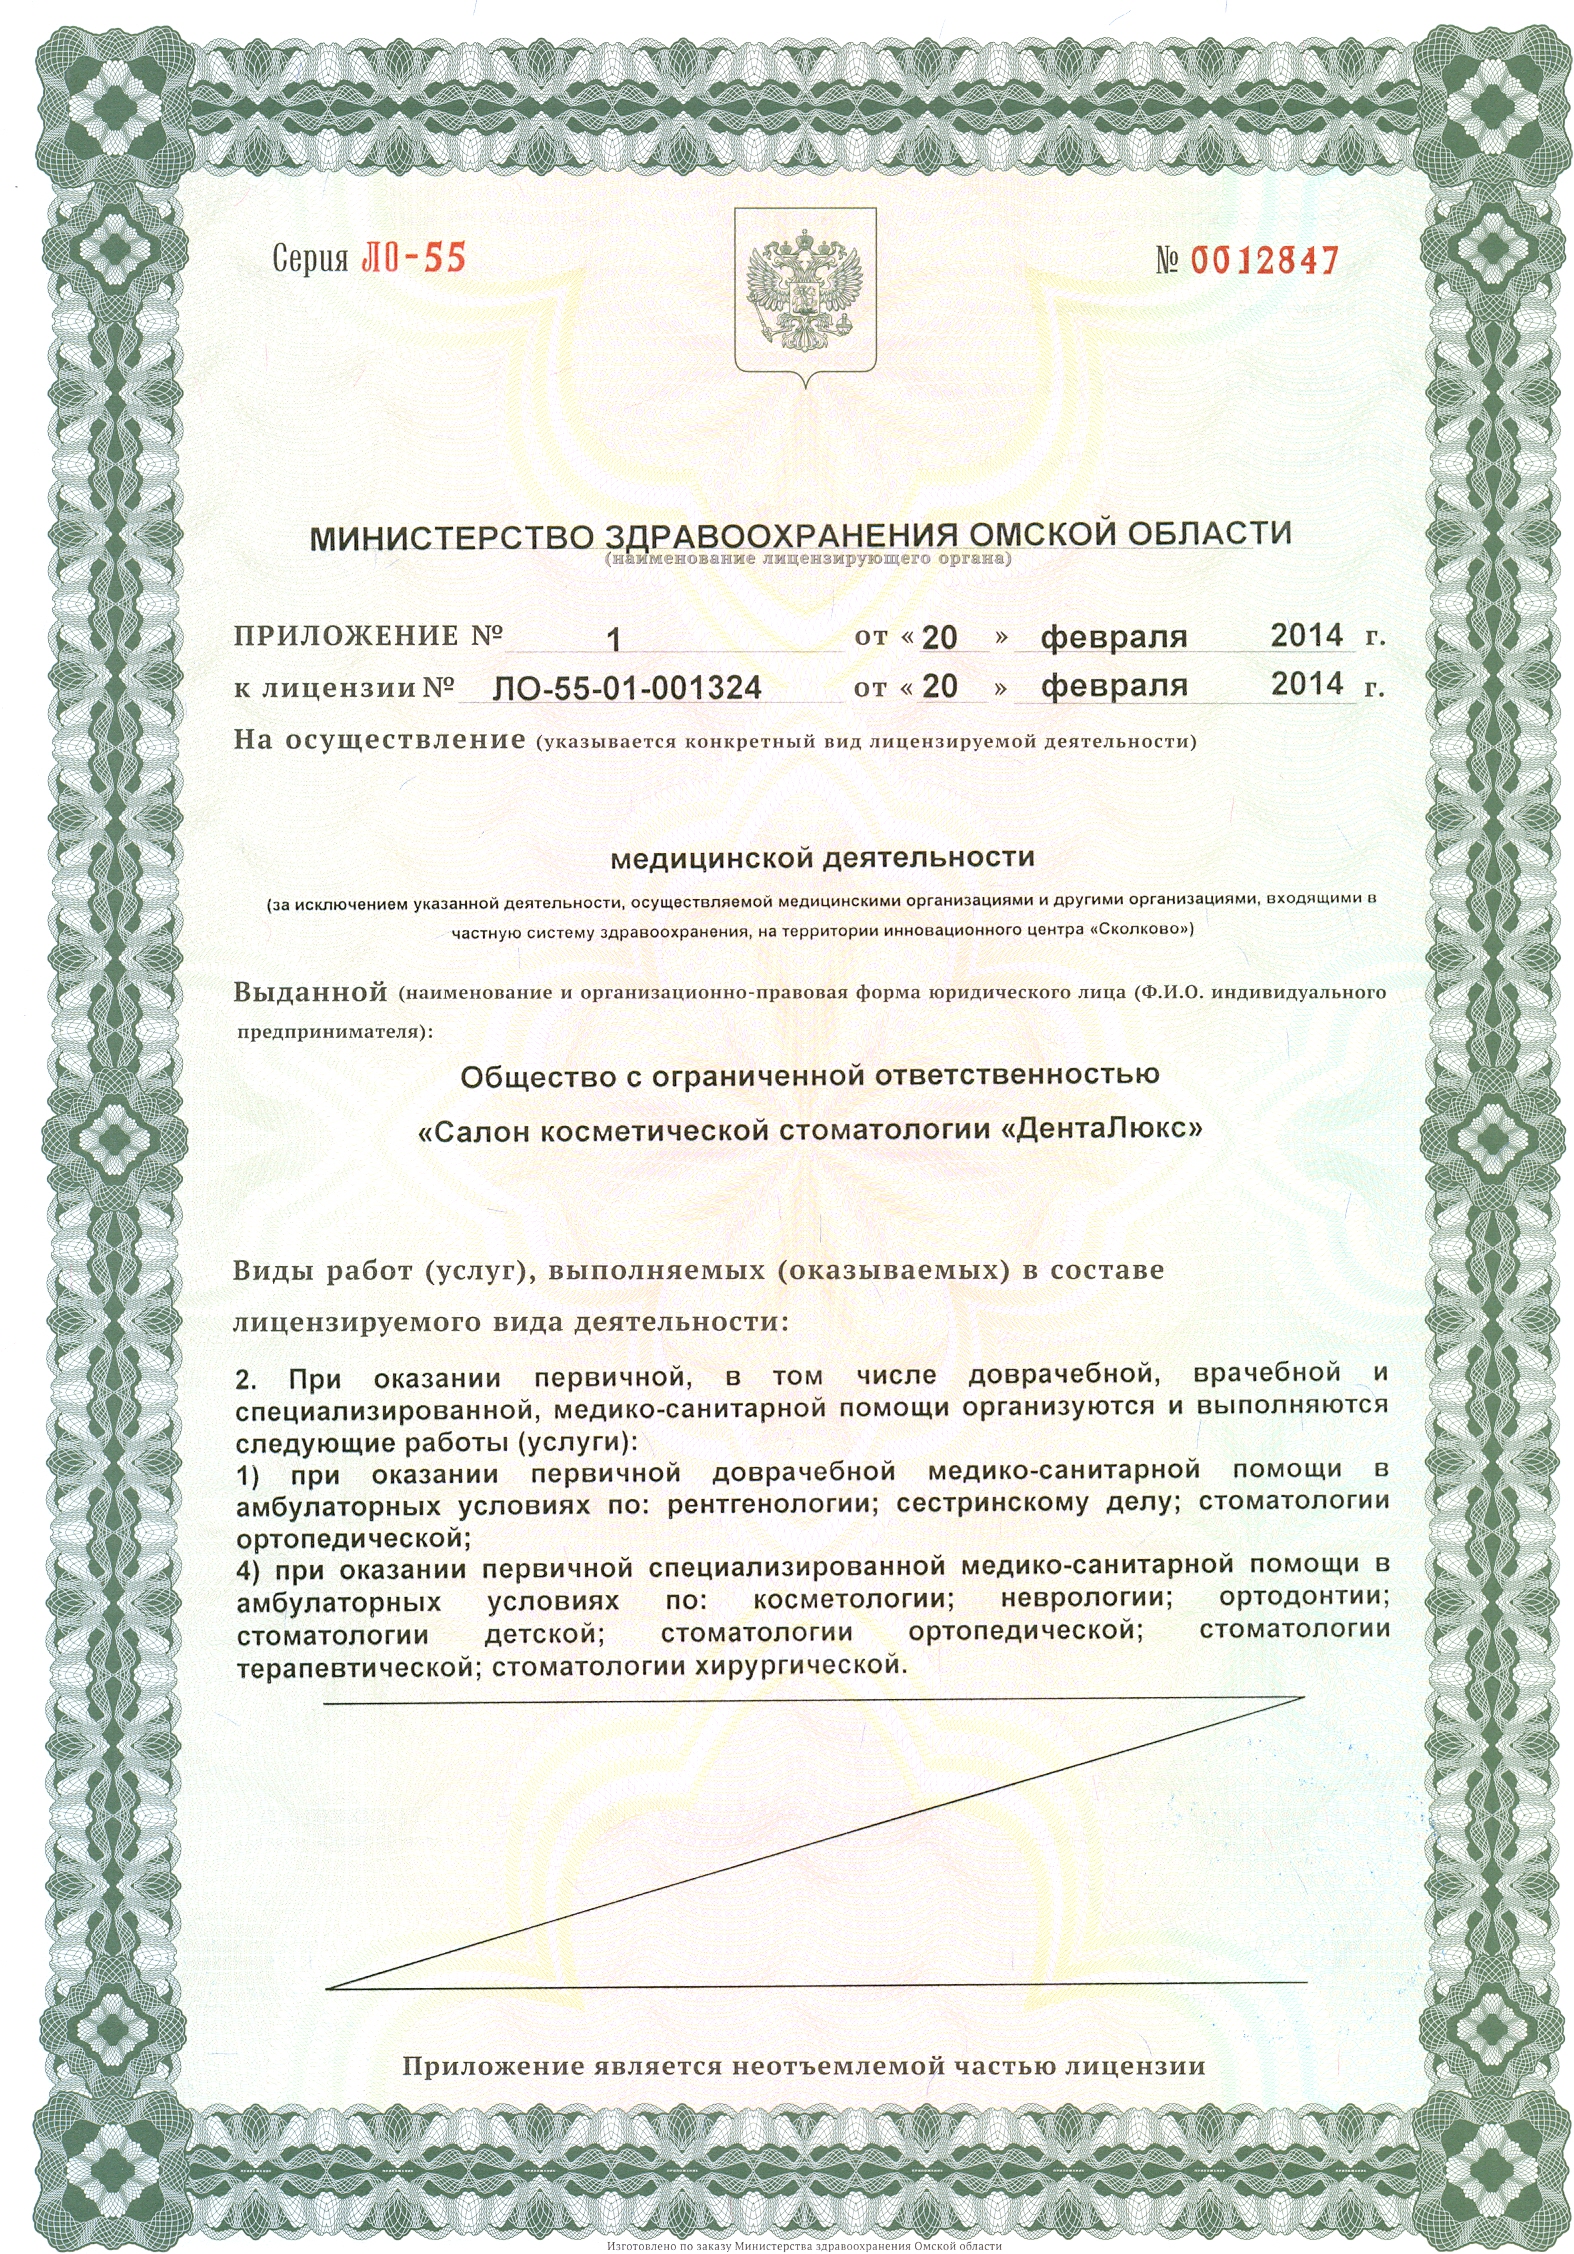 License 1